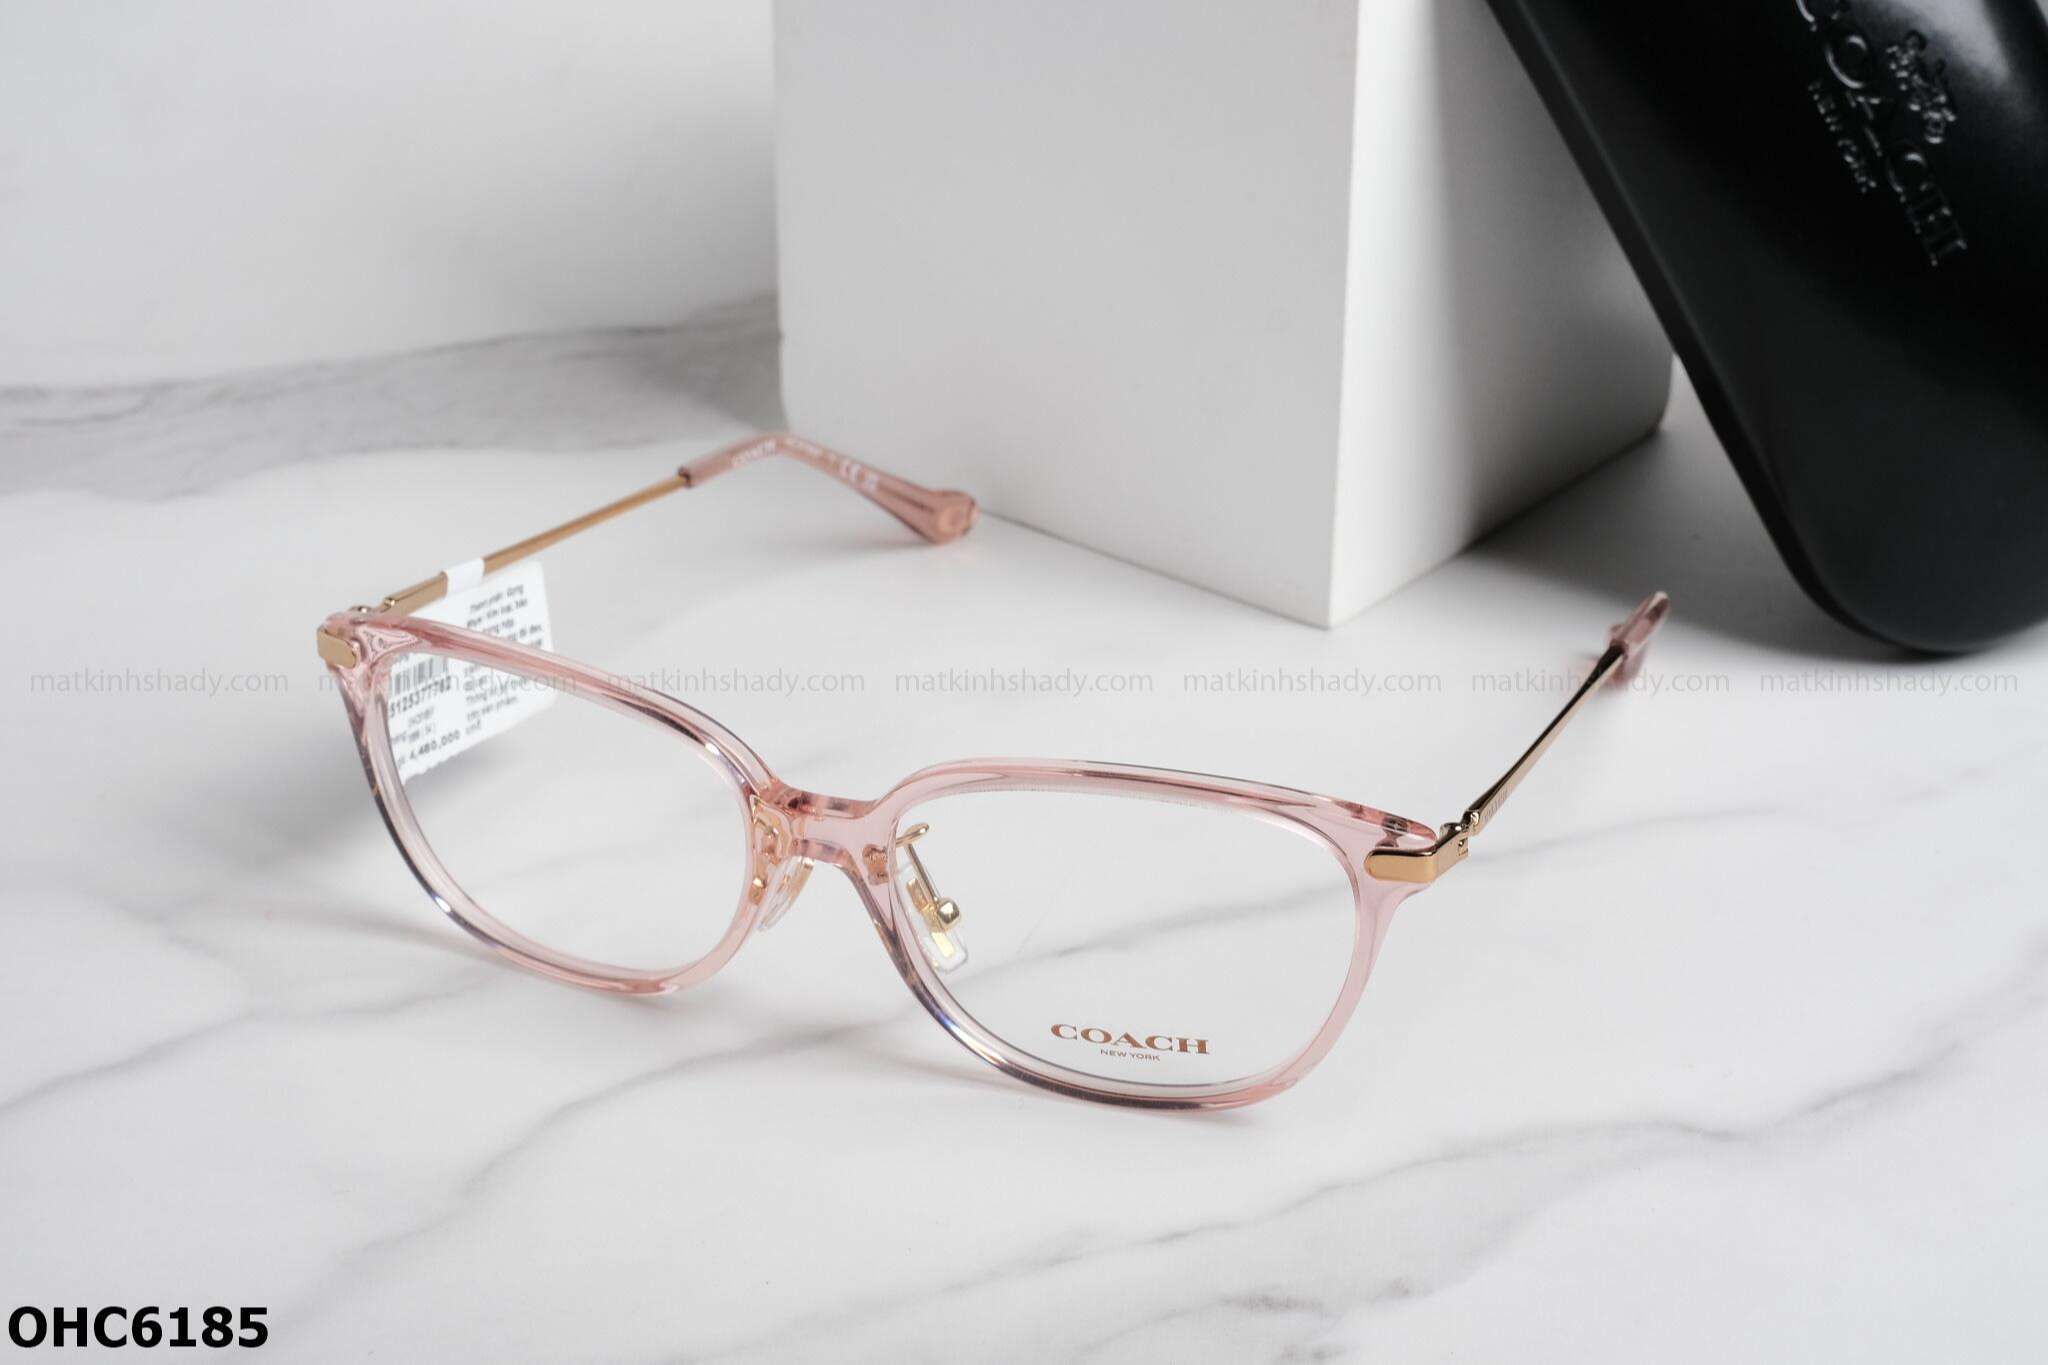  Coach Eyewear - Glasses - OHC6185 